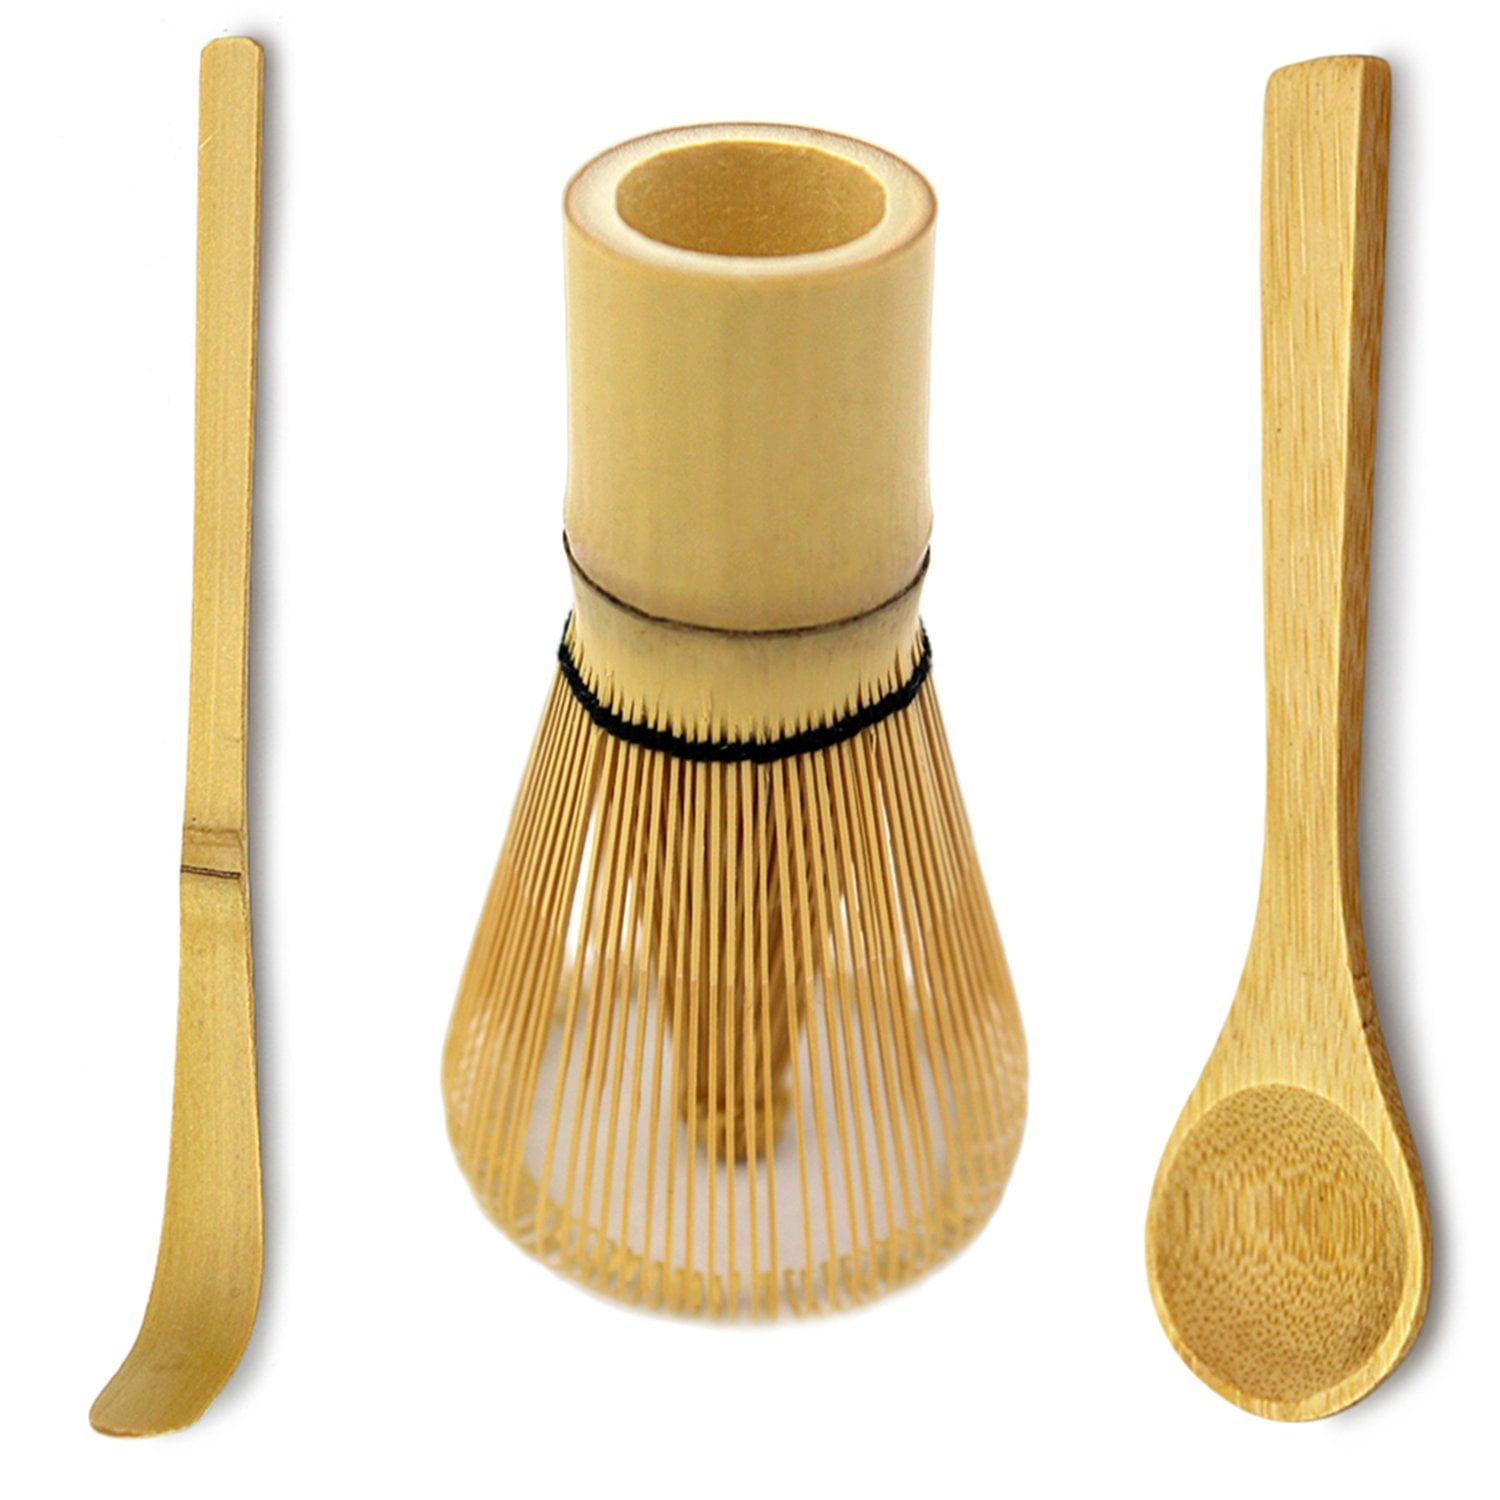 70-75 Prong Nutural Bamboo Matcha Tea Whisk with Matcha Scoop Tea Tools 